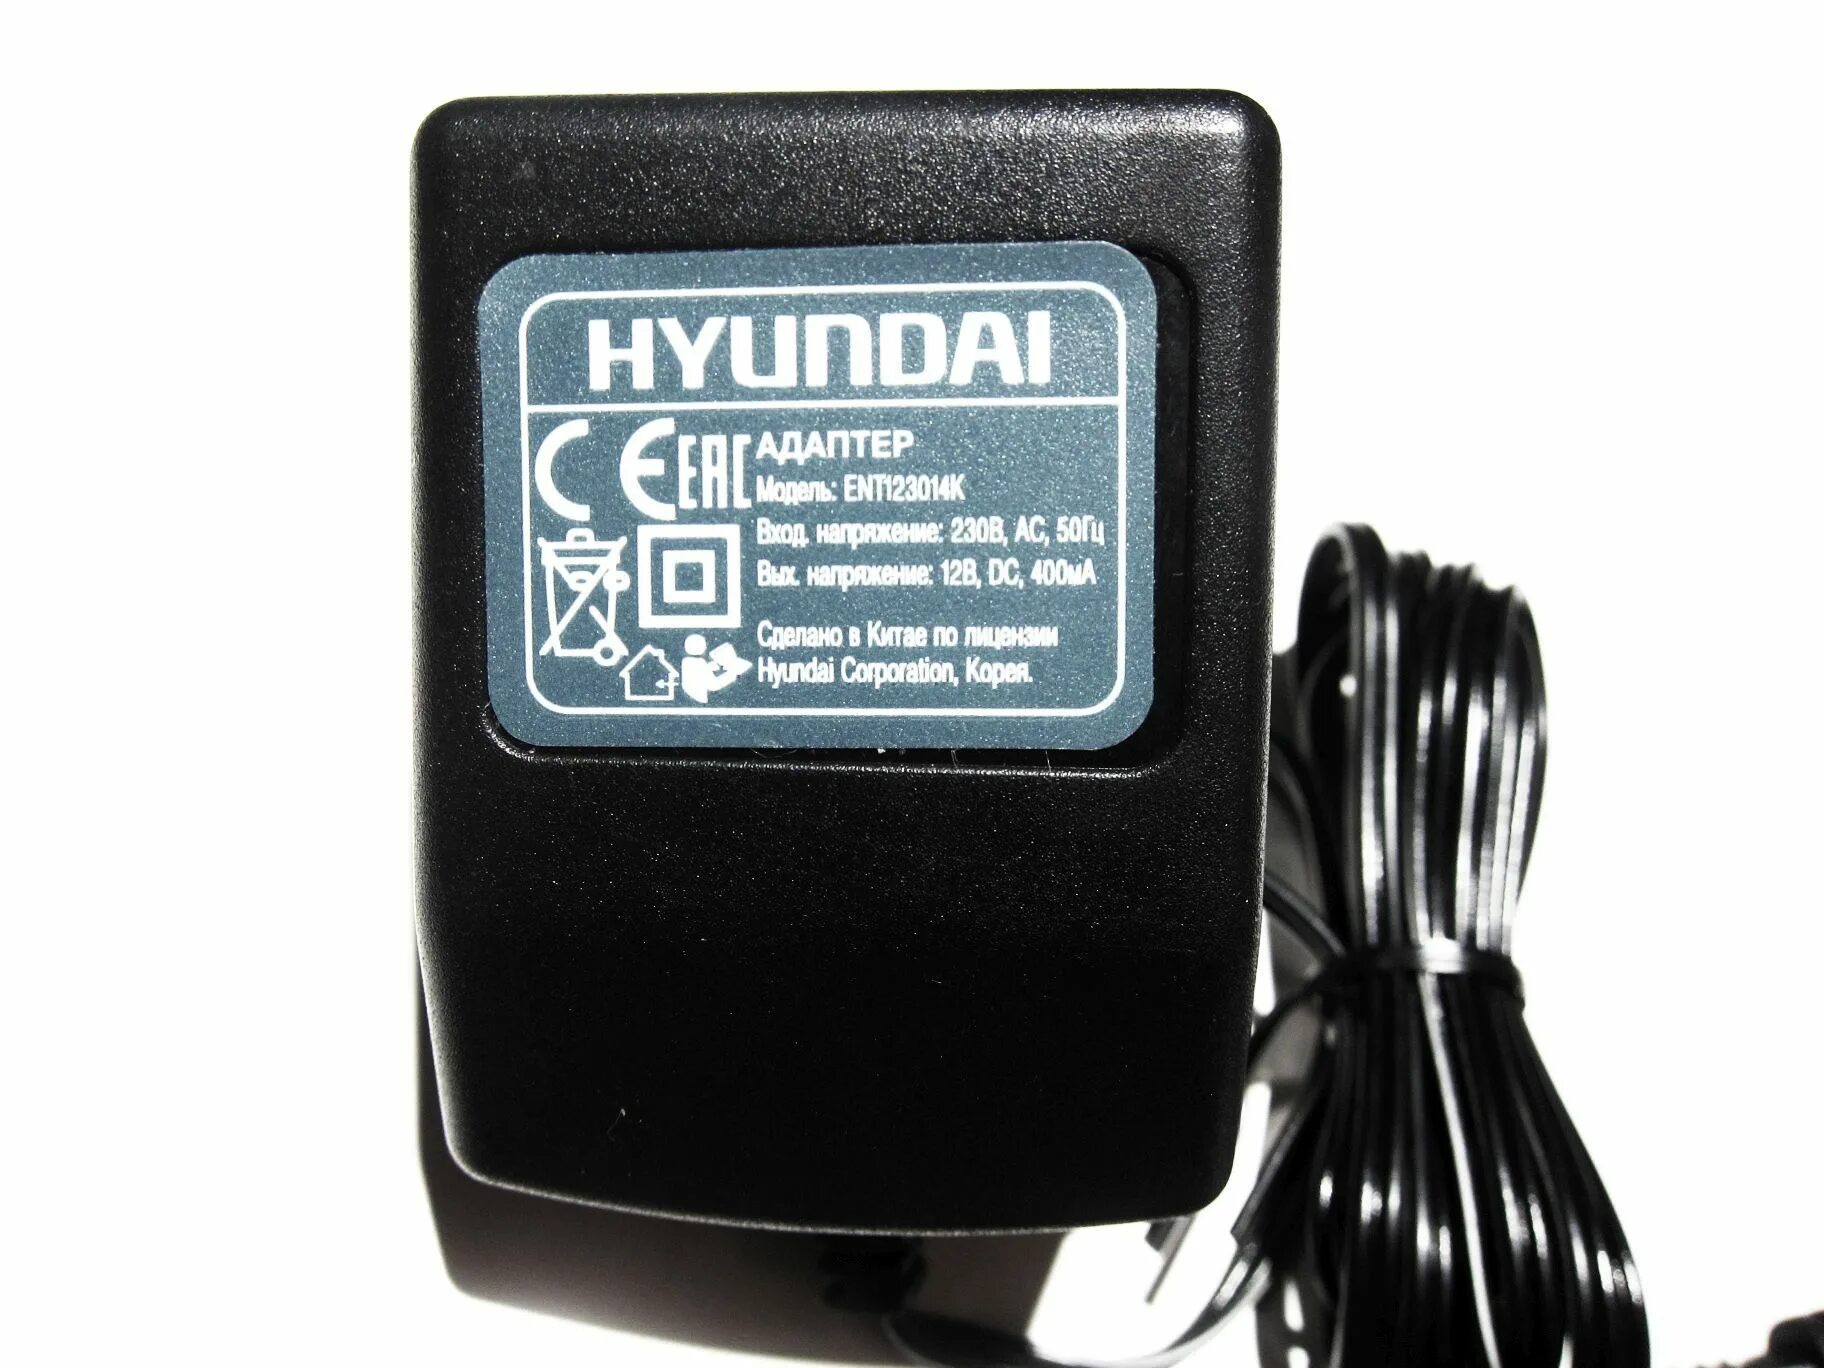 Зарядное Hyundai ent123014k. Ent123015k зарядное Hyundai. Зарядное для шуруповерта Hyundai ent123014k. Зарядка для шуруповерта Hyundai a1201.